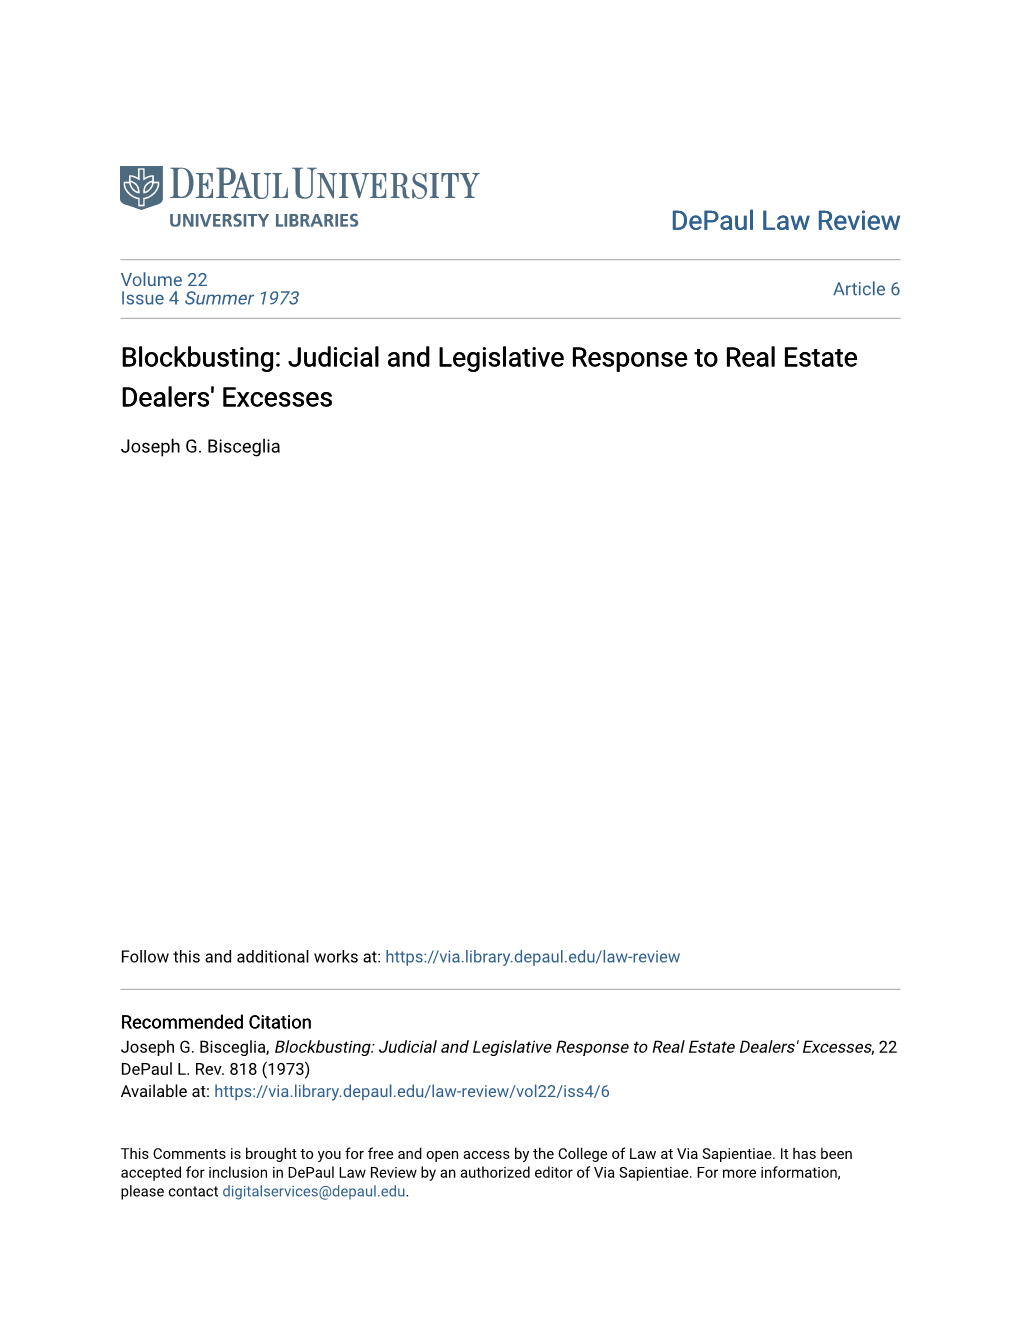 Blockbusting: Judicial and Legislative Response to Real Estate Dealers' Excesses